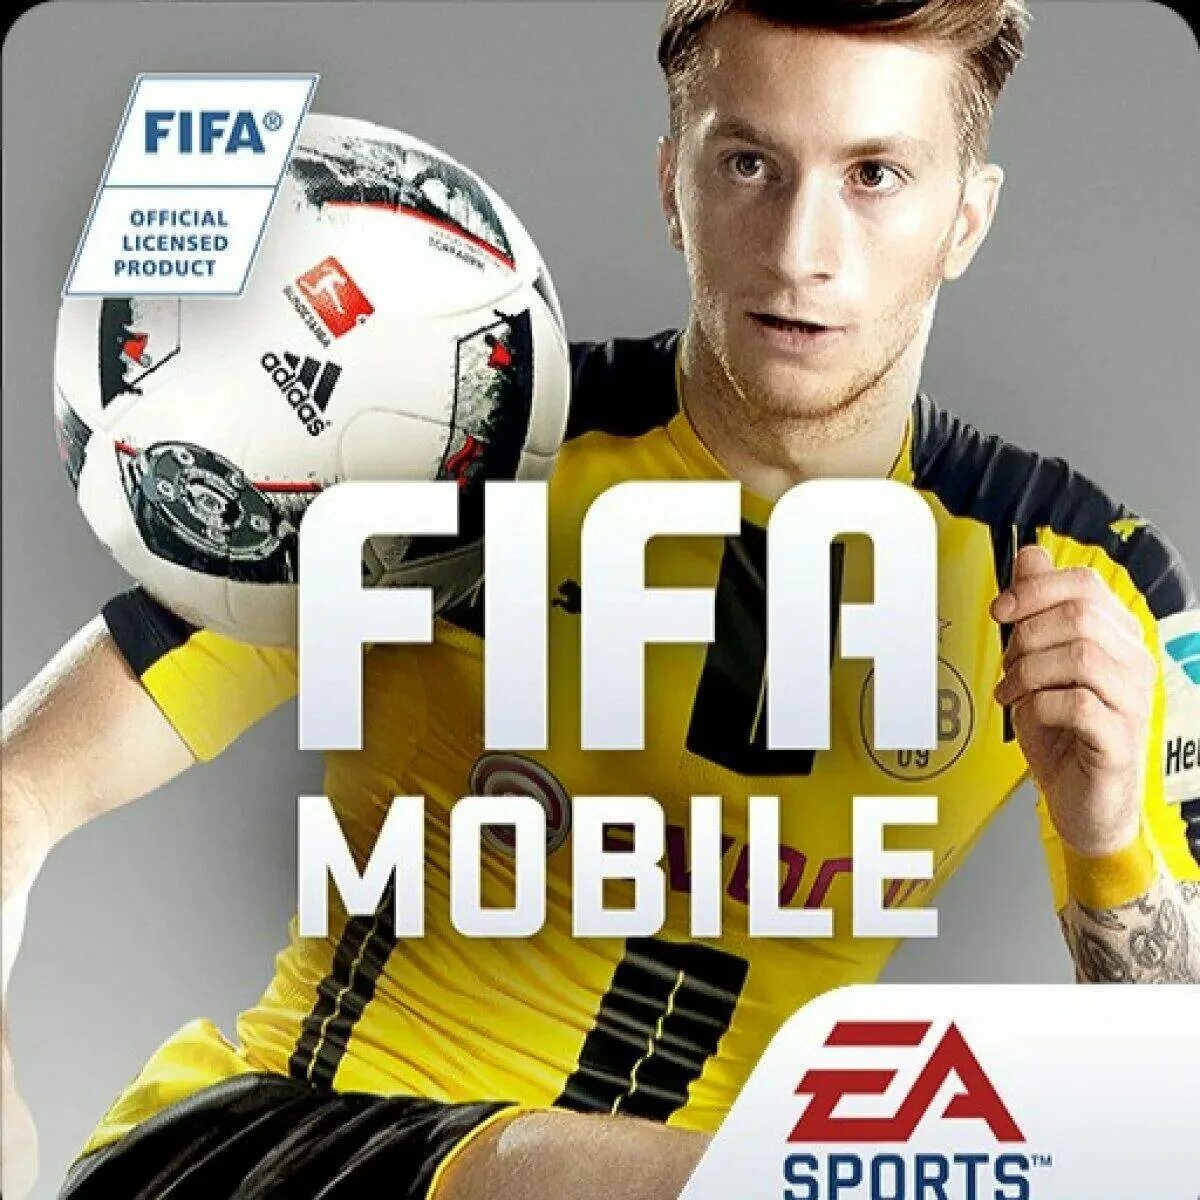 Fifa mobile apk. ФИФА мобайл. Фото ФИФА мобайл. ФИФА мобайл 17. FIFA mobile обложка.